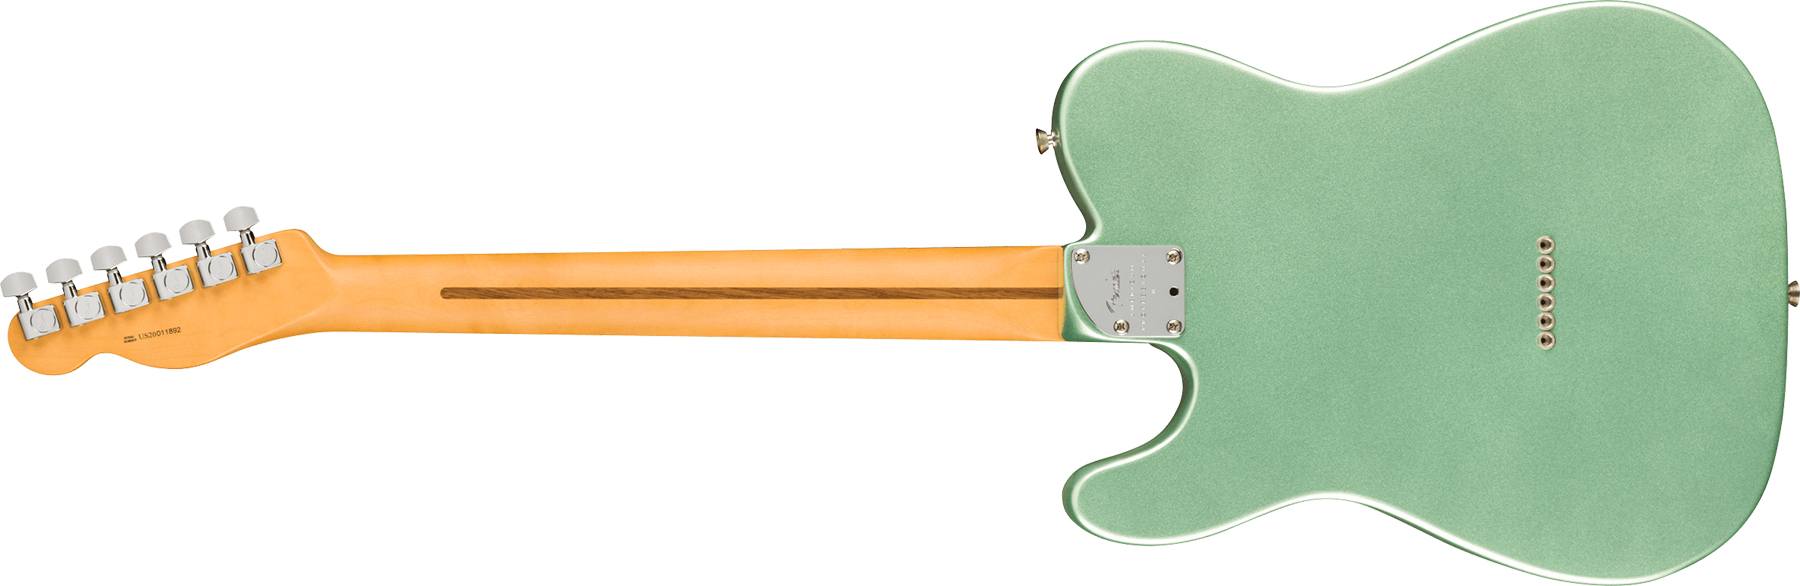 Fender Tele American Professional Ii Usa Rw - Mystic Surf Green - Televorm elektrische gitaar - Variation 1